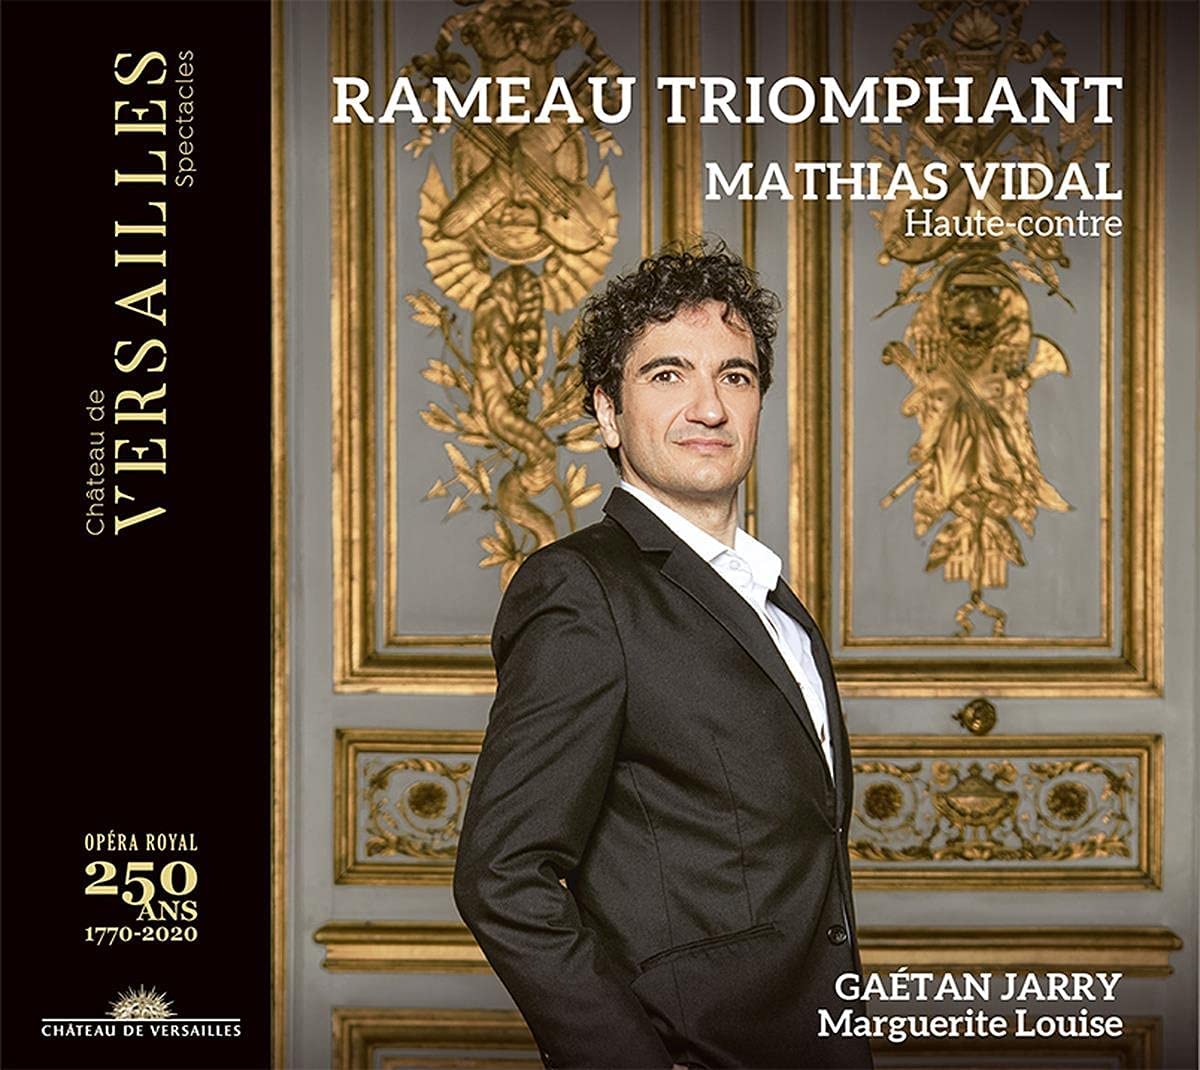 CD cover of Rameau Triomphant